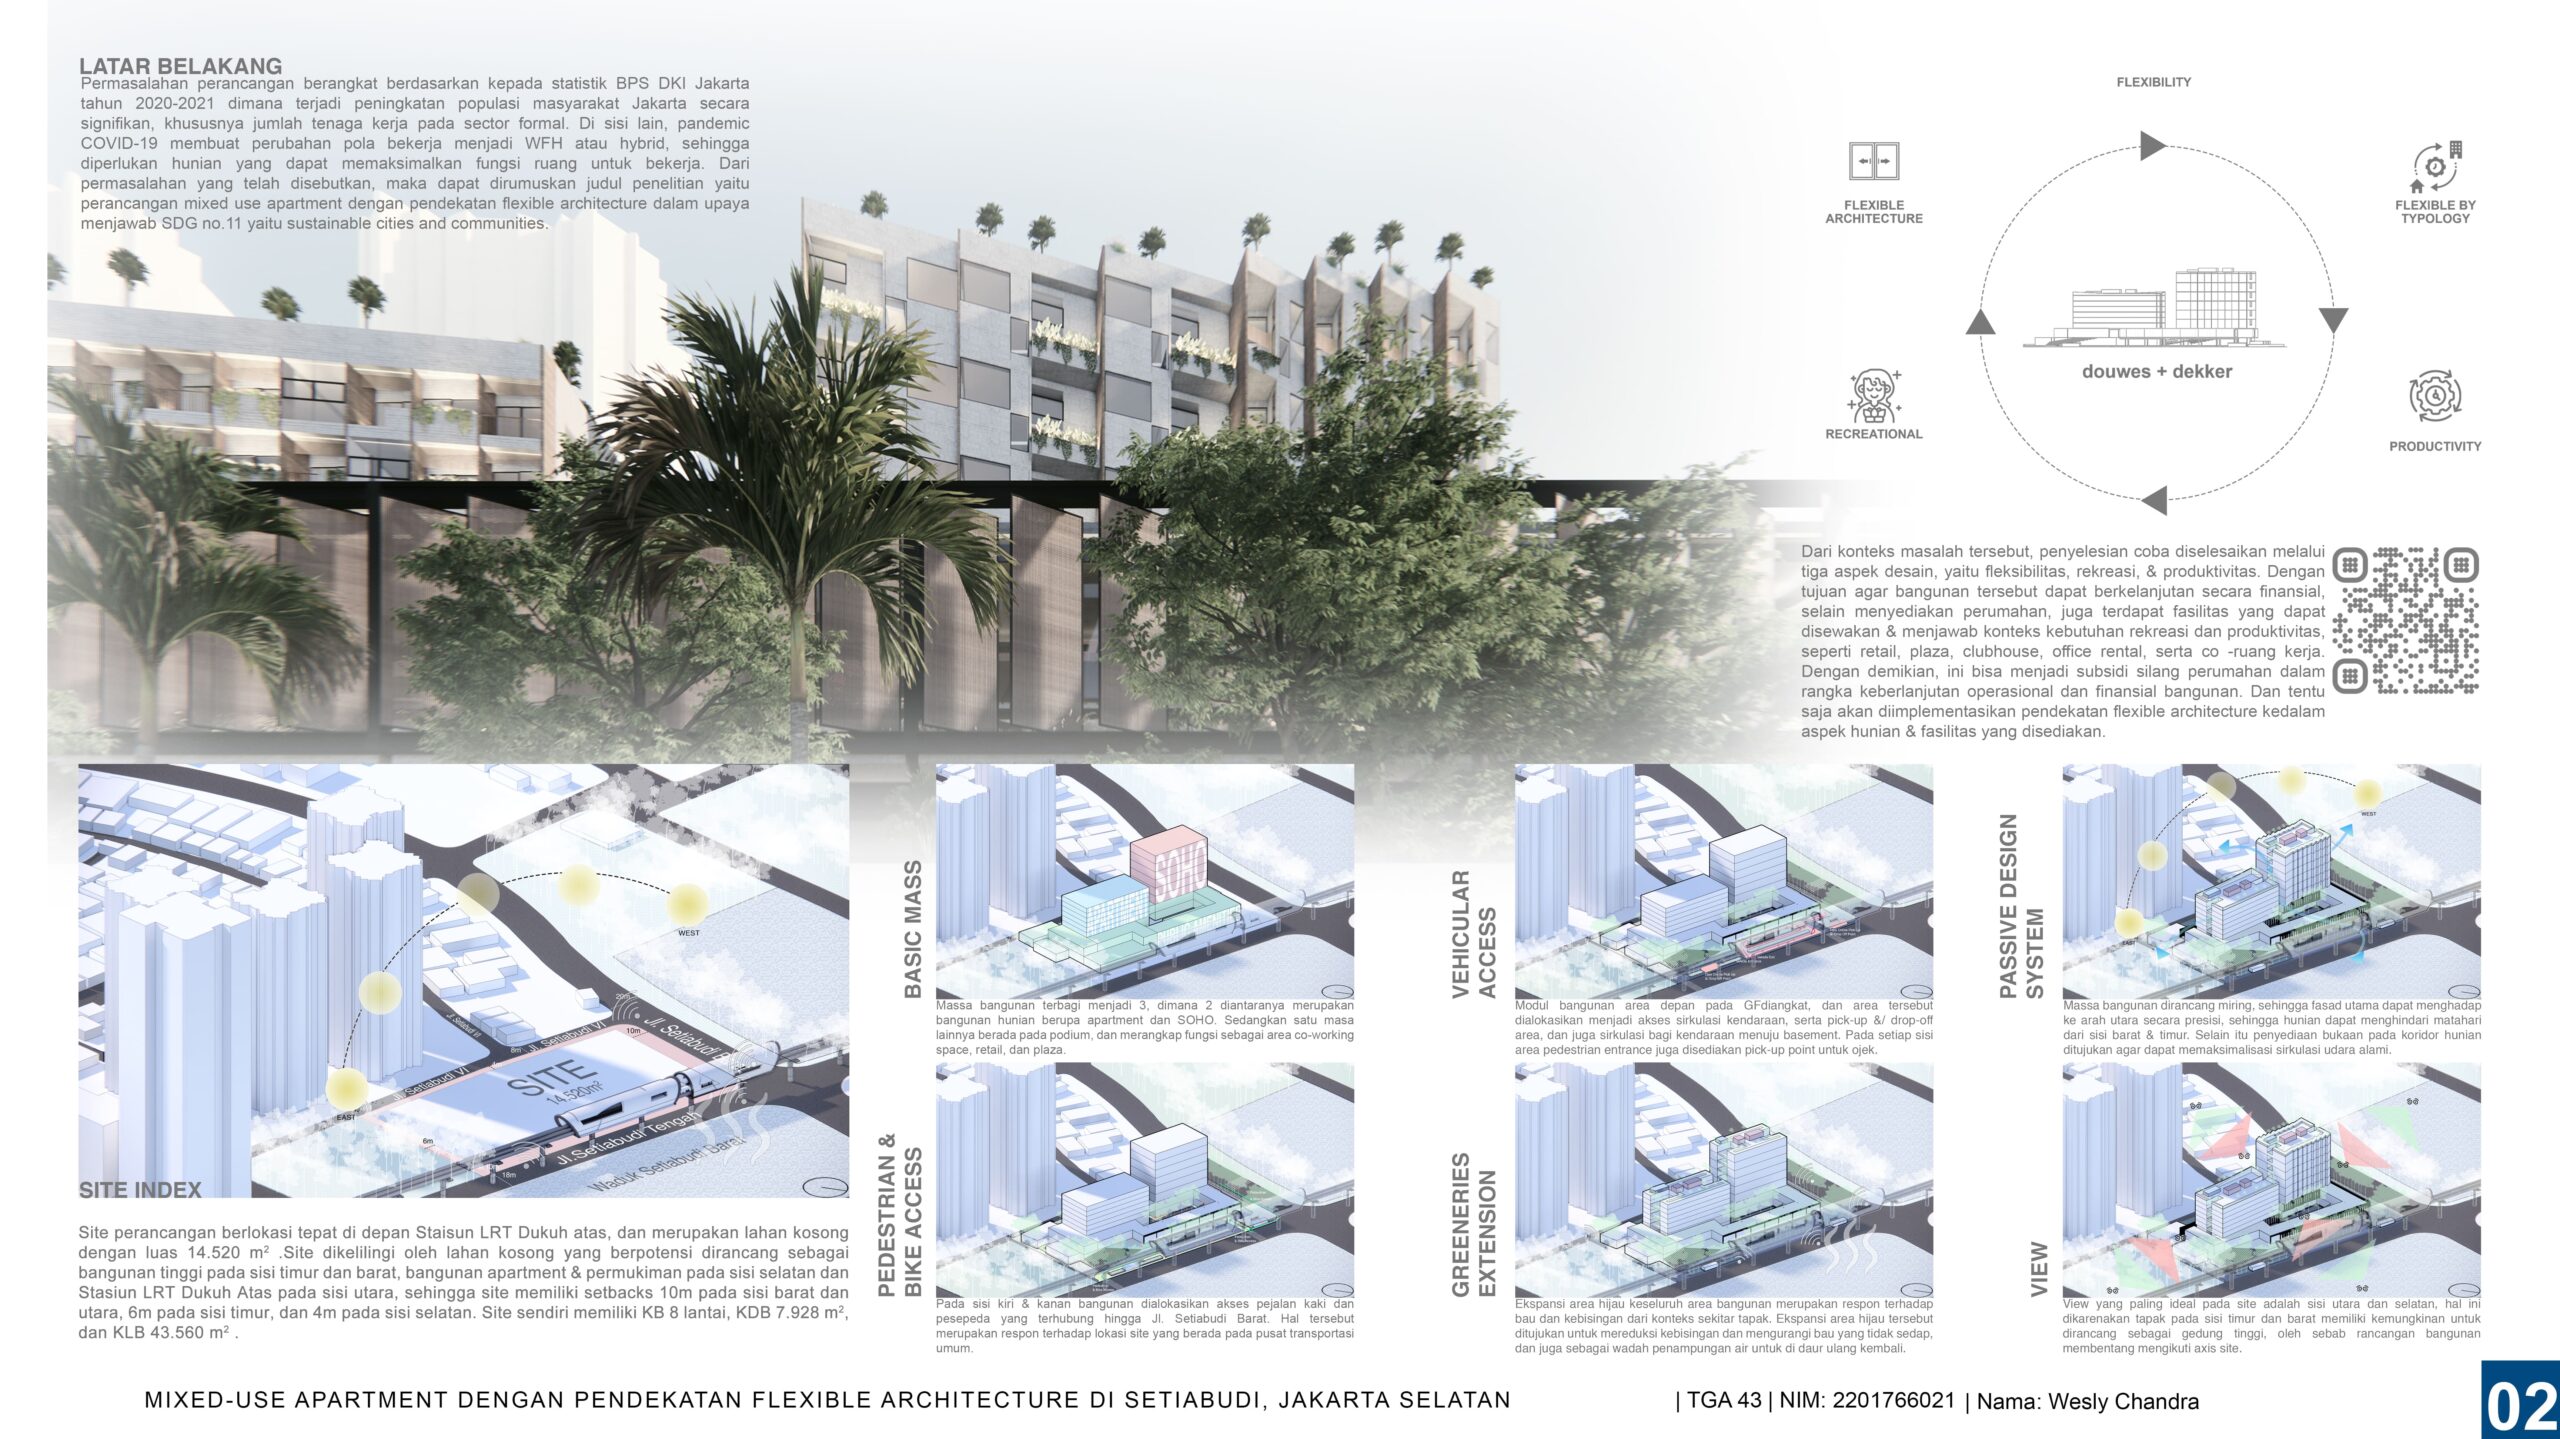 Mixed Use Apartment Dengan Pendekatan Flexible Architecture di Setiabudi, Jakarta Selatan